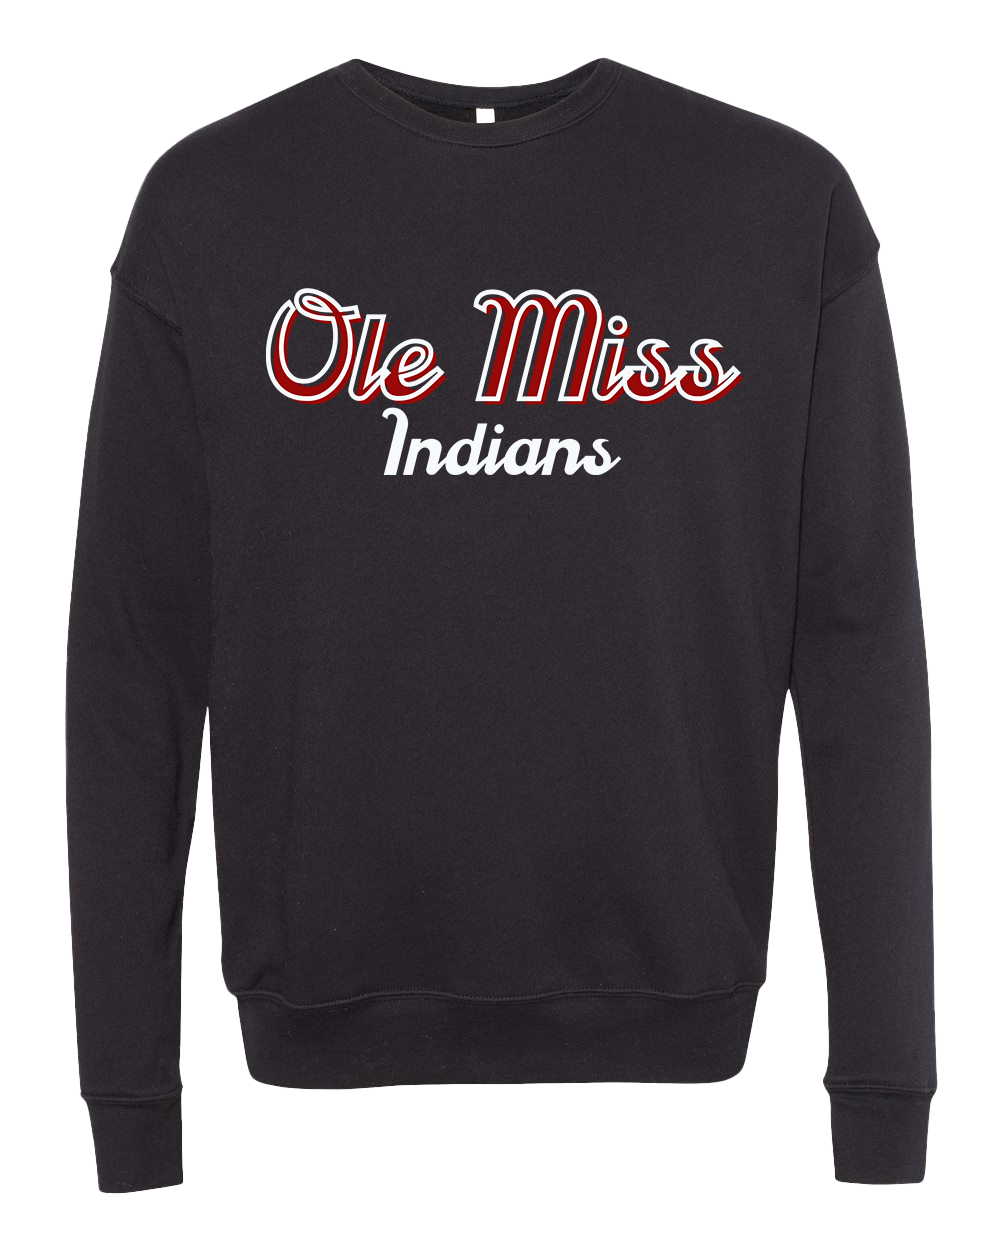 Ole Miss Indians Crew Sweatshirt - Black